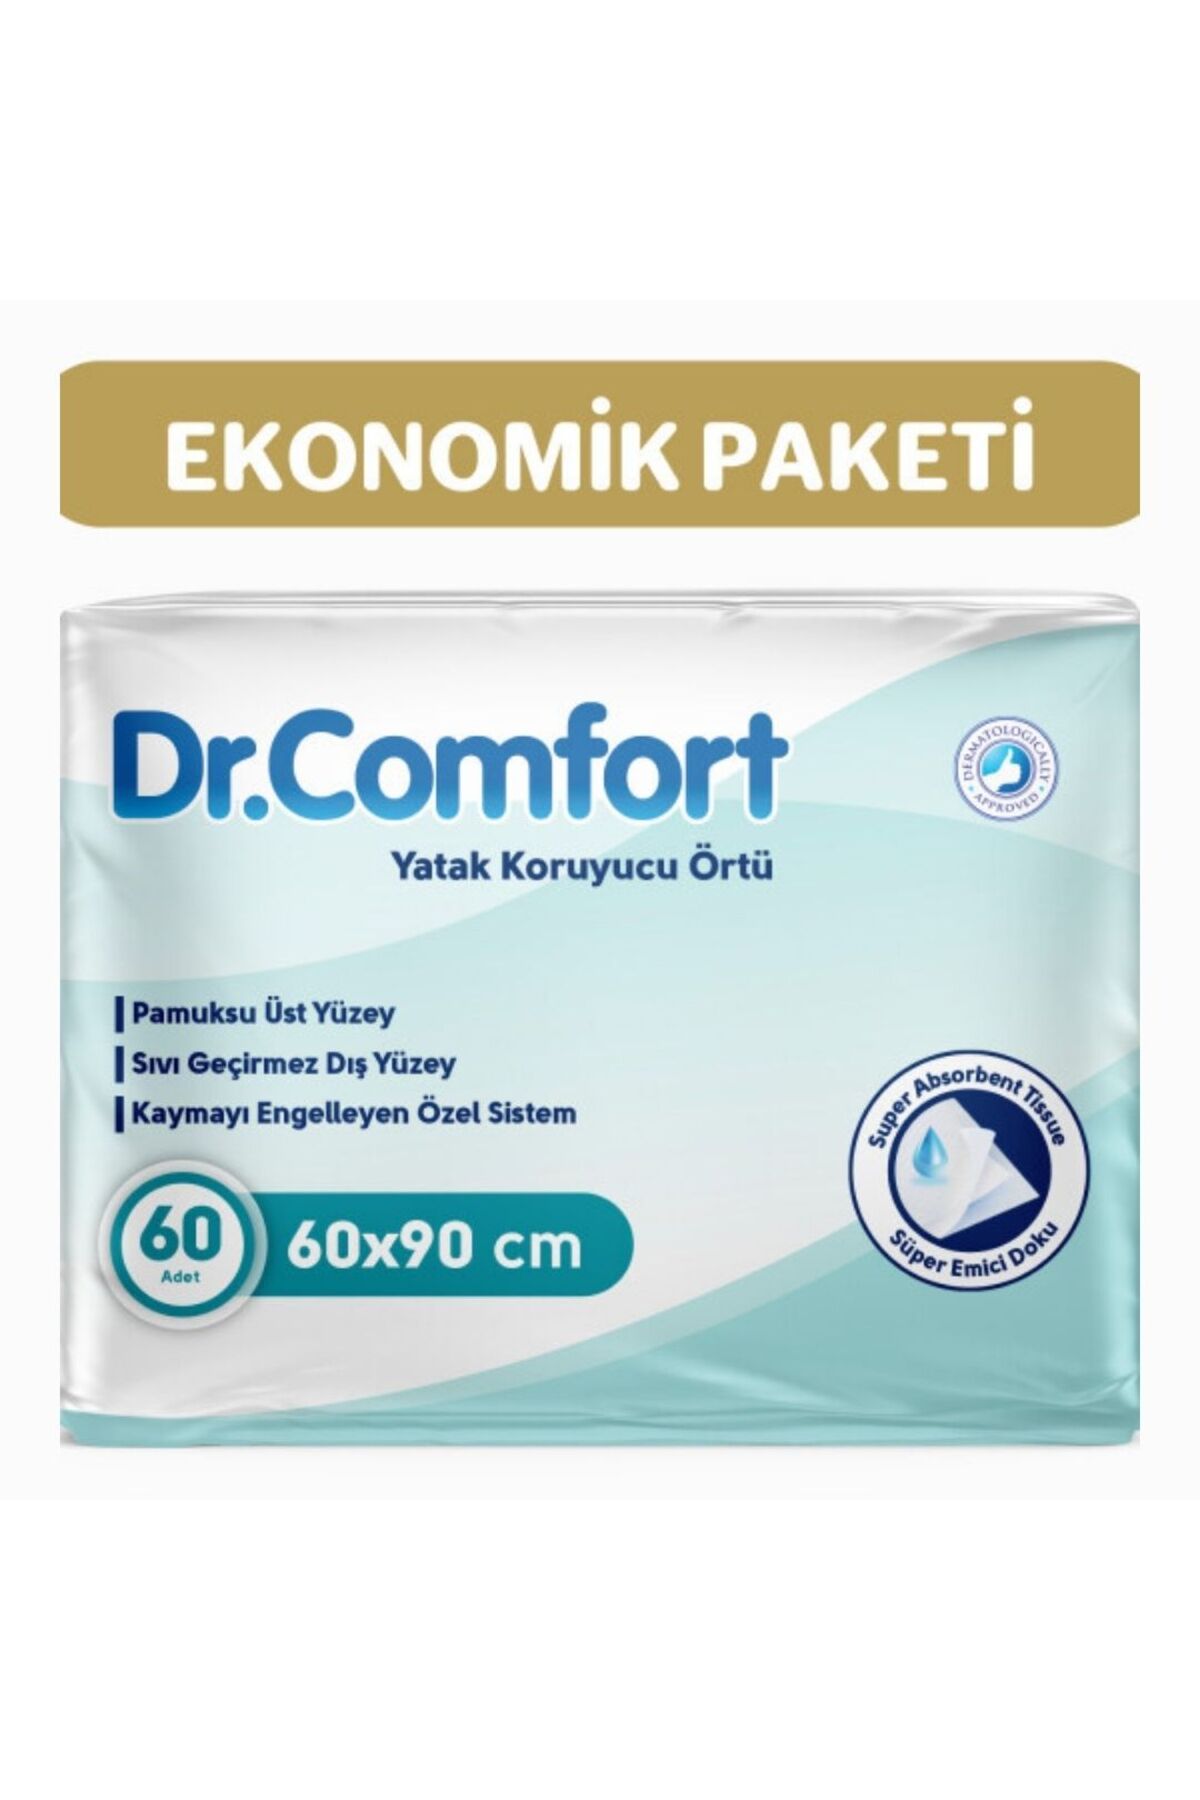 Dr.Comfort Dr Comfort 60x90 Yatak Koruyucu Örtü 60 Adet